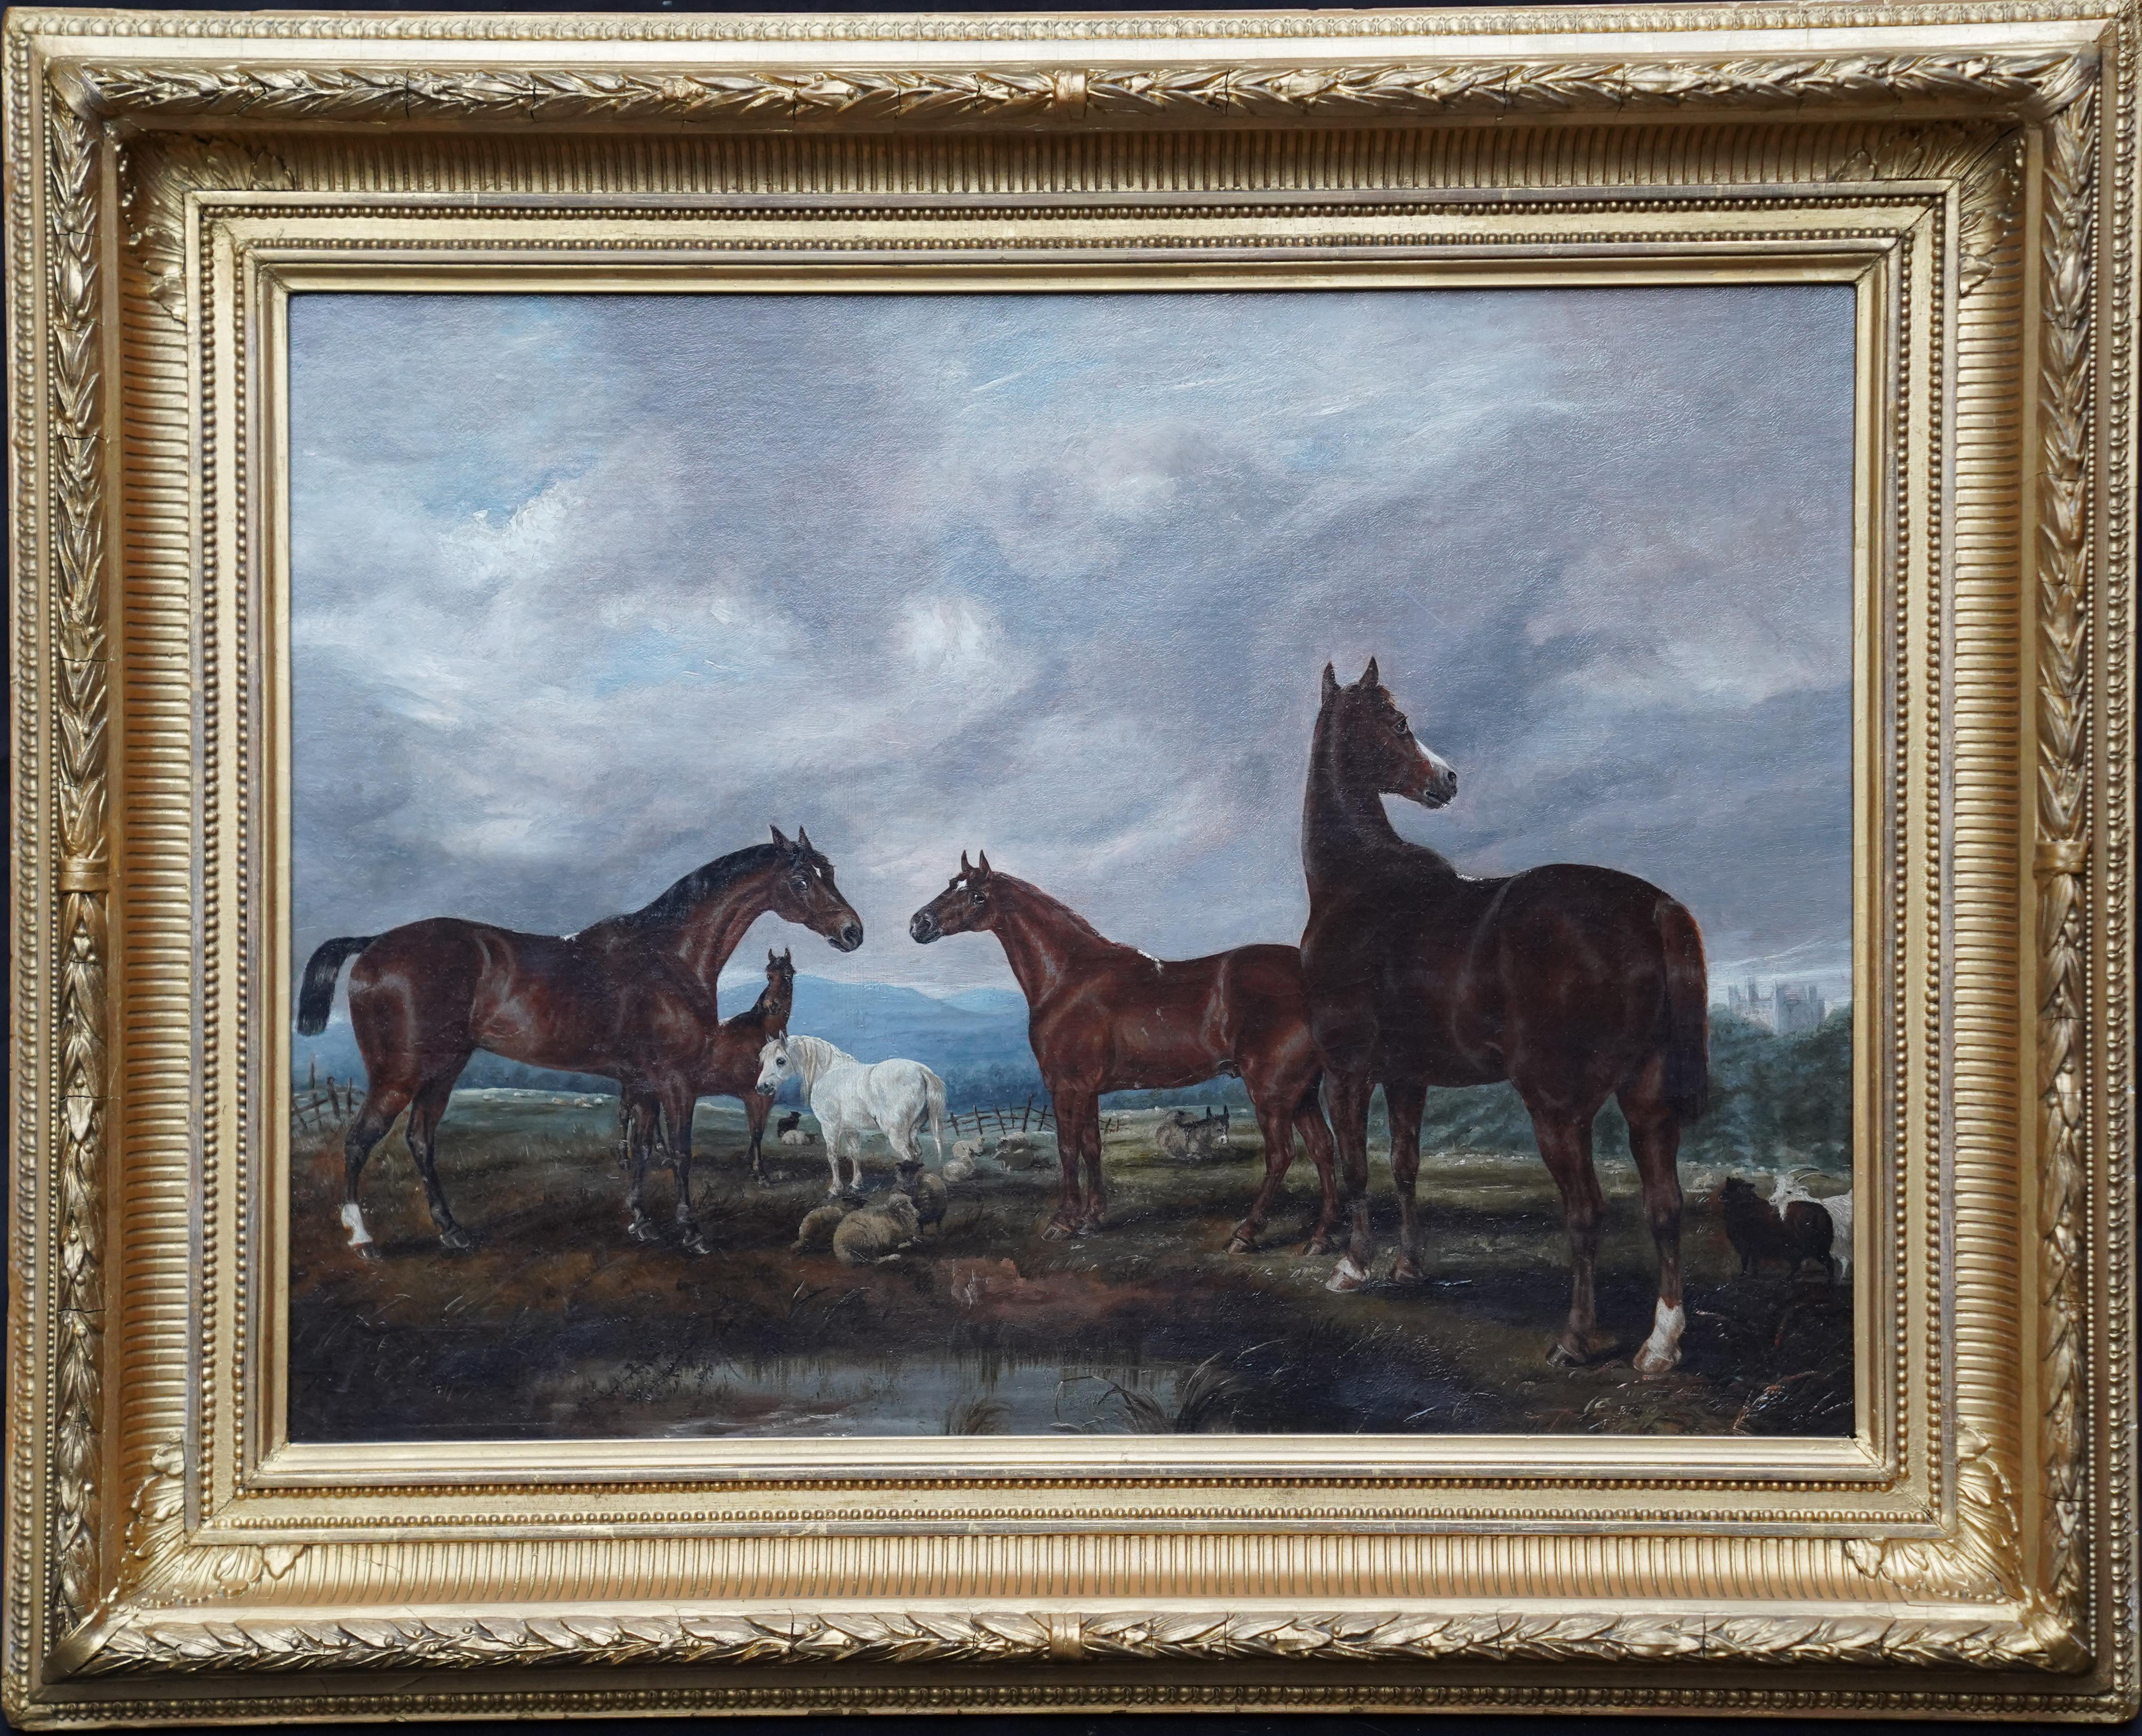 Horses in Landscape - British Victorian art equine animal portrait oil painting